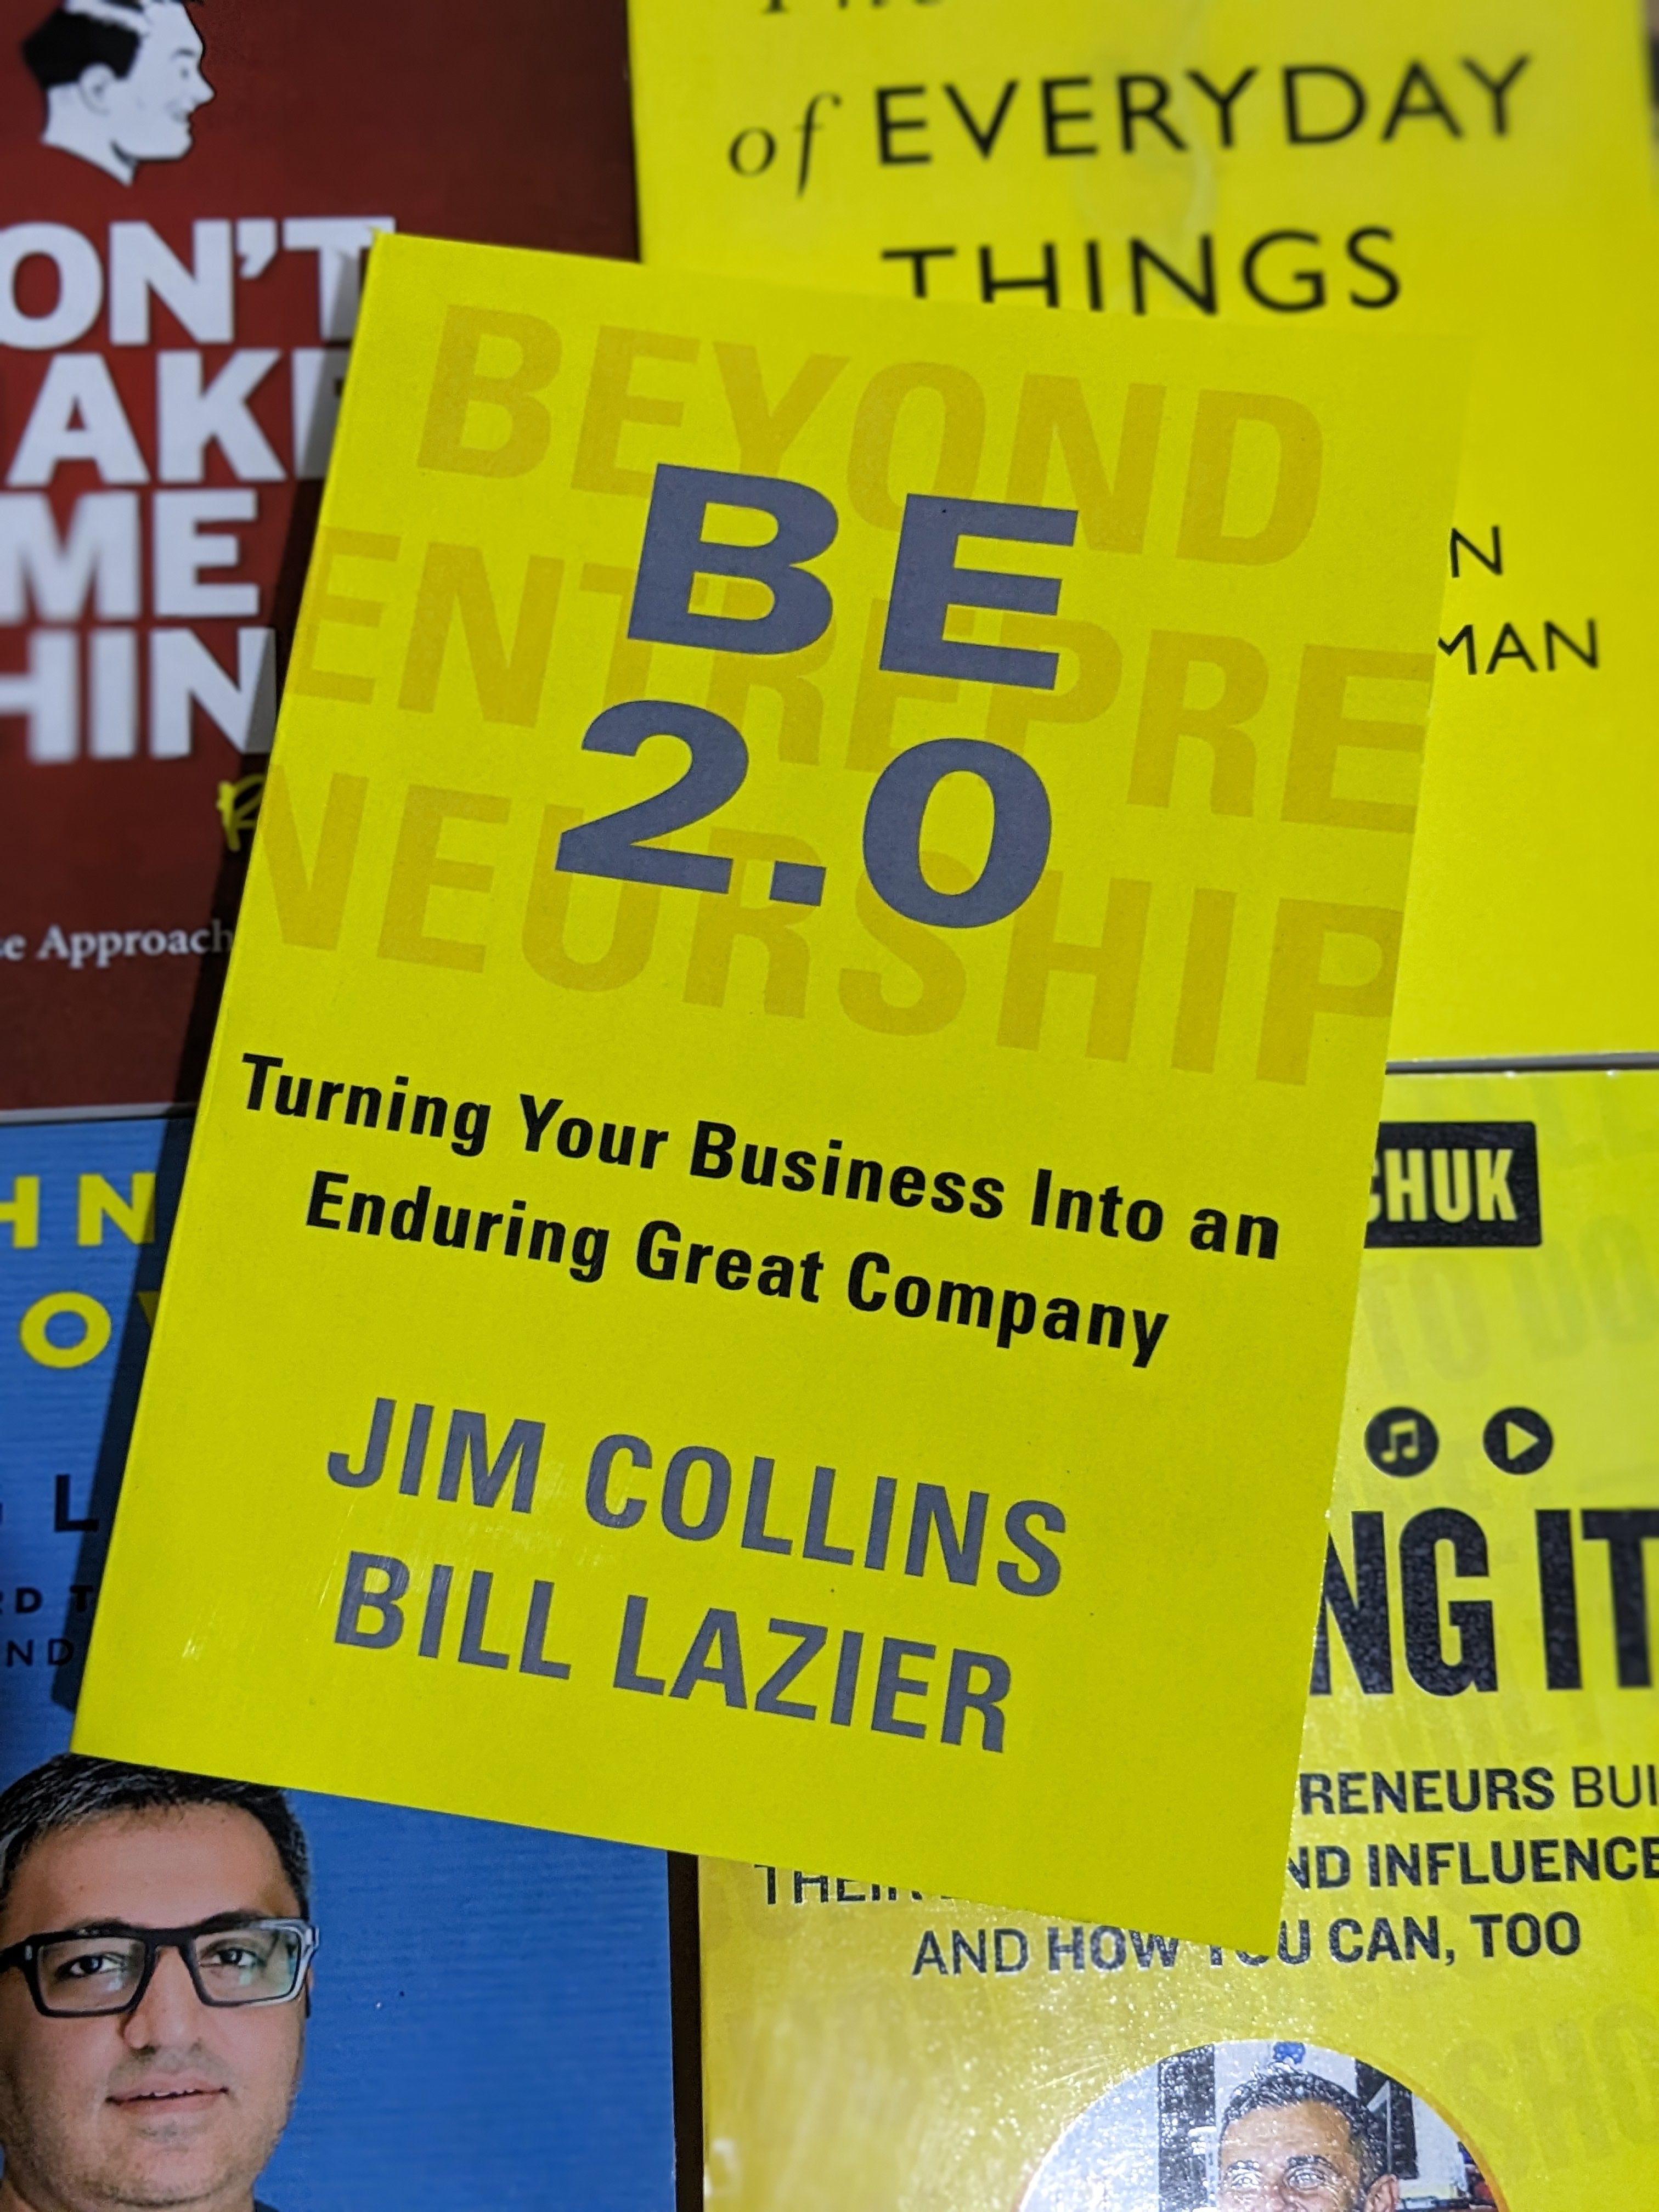 BE 2.0 (Beyond Entrepreneurship 2.0) by James C. Collins 